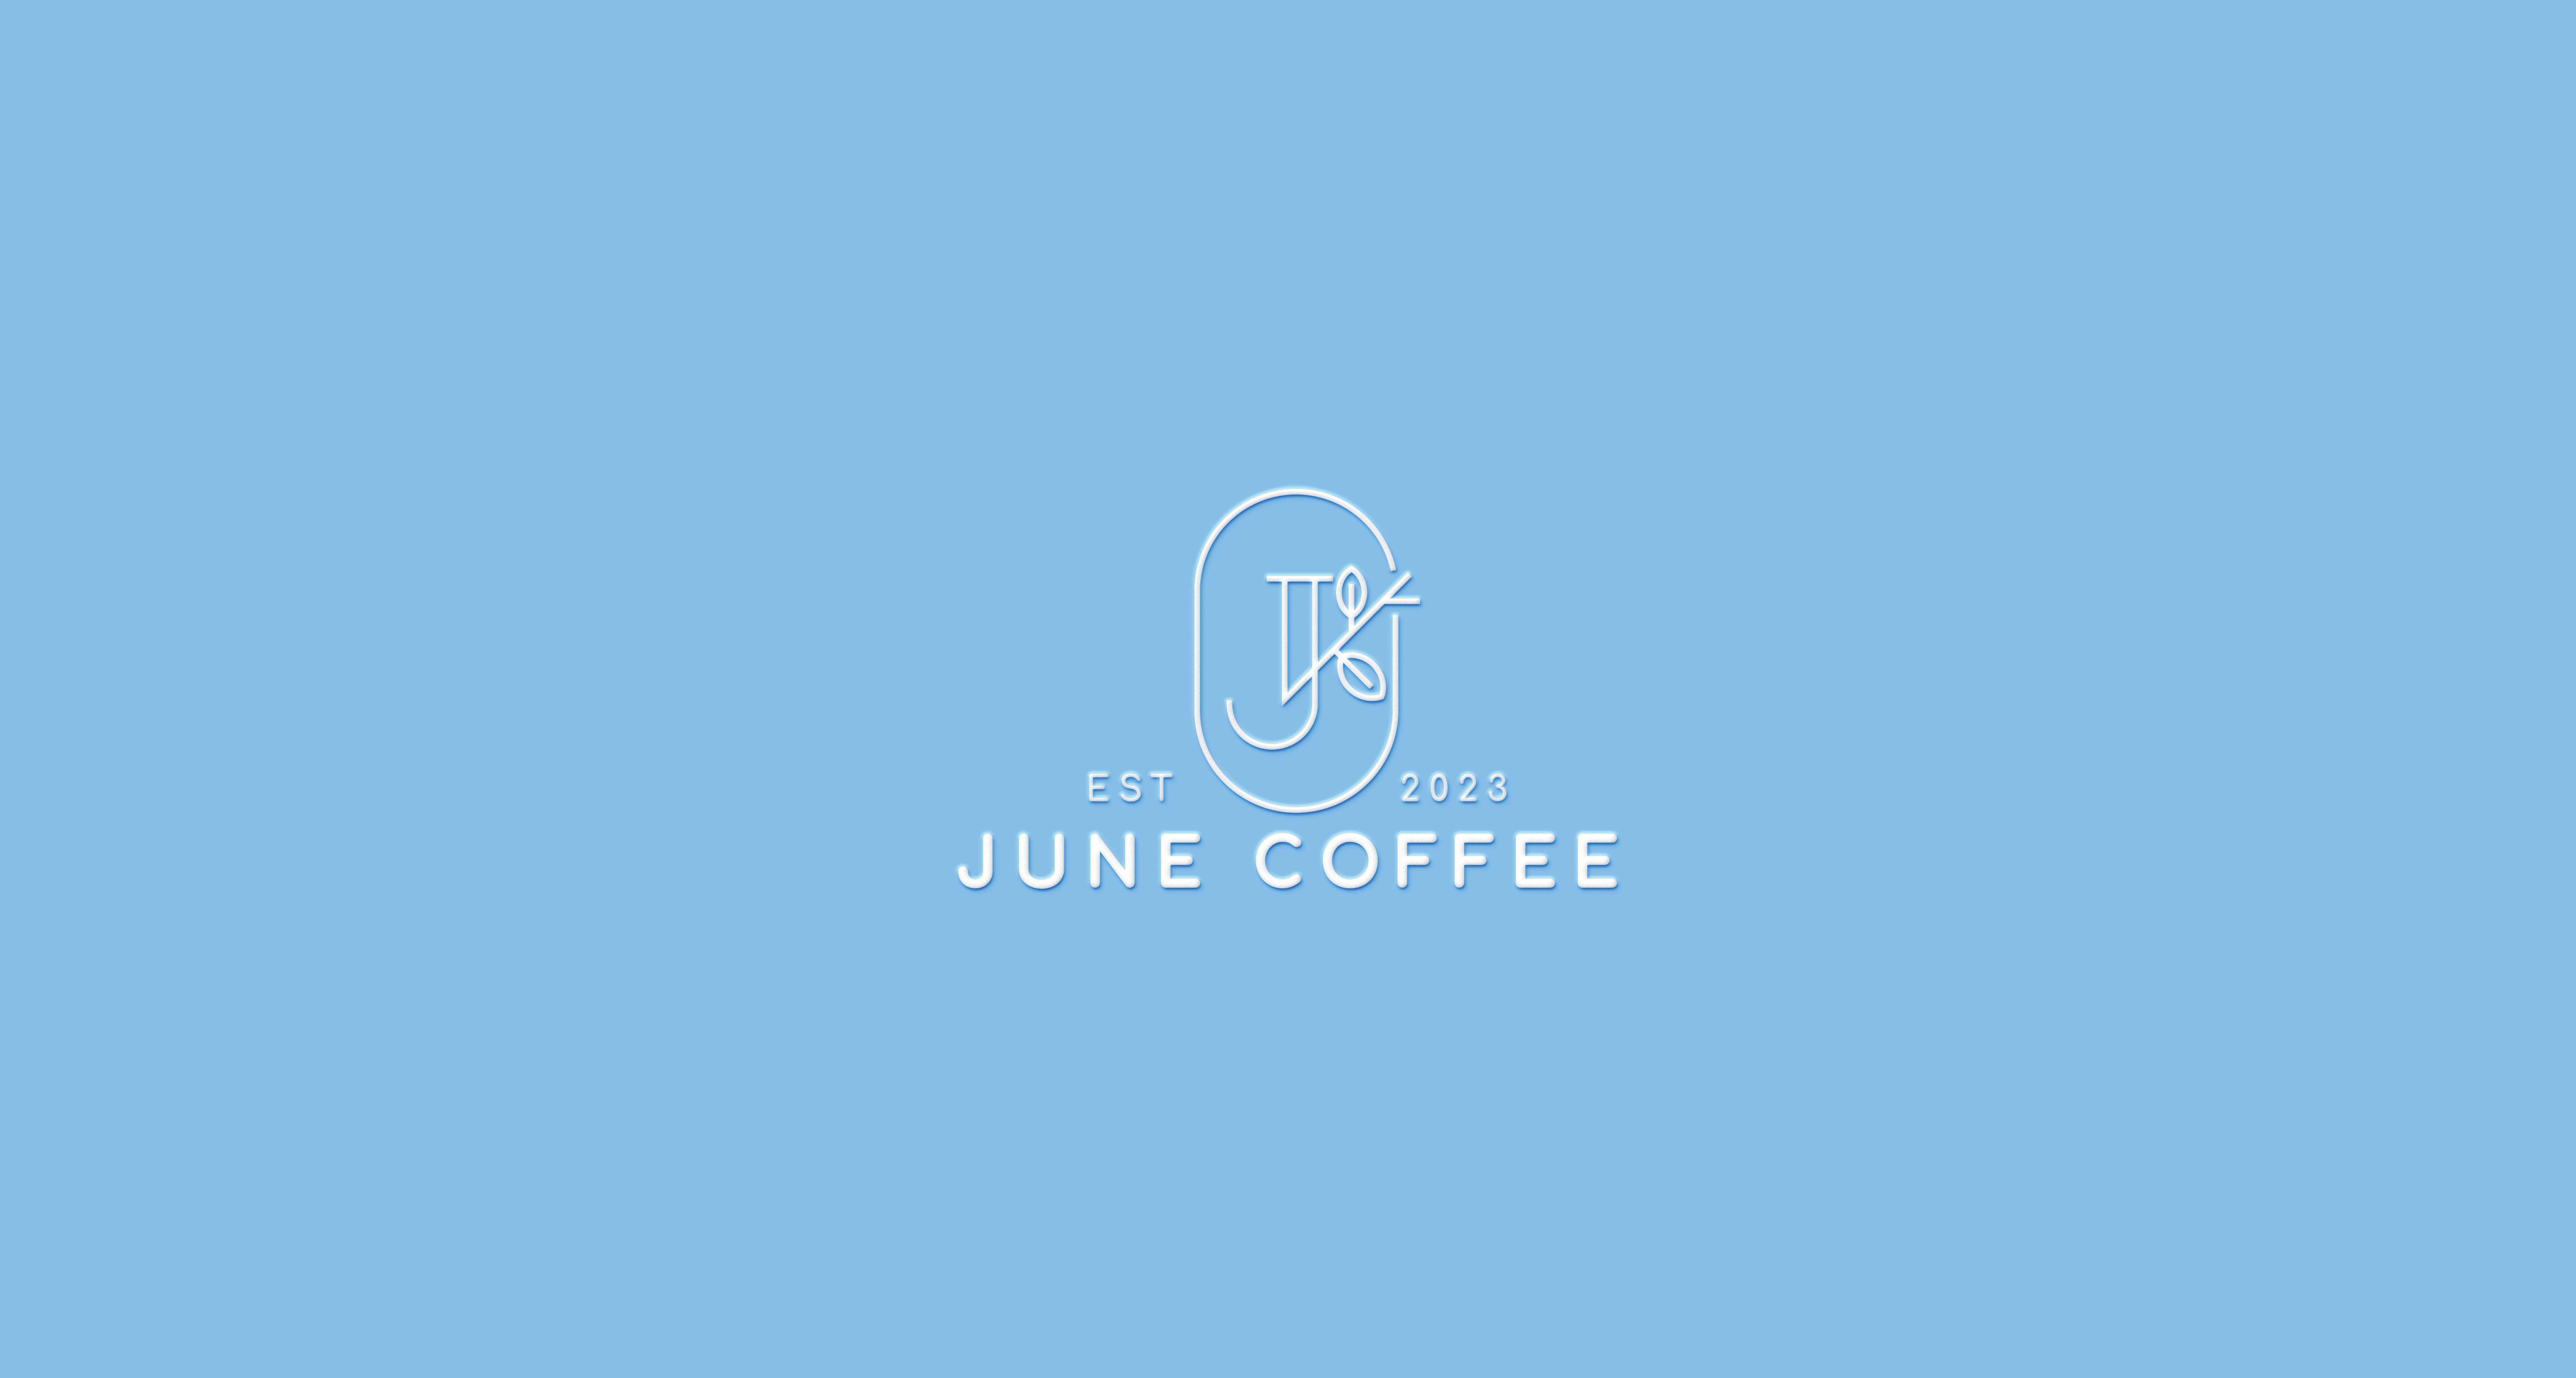 June Coffee Brand Identity Designed By 3T Branding